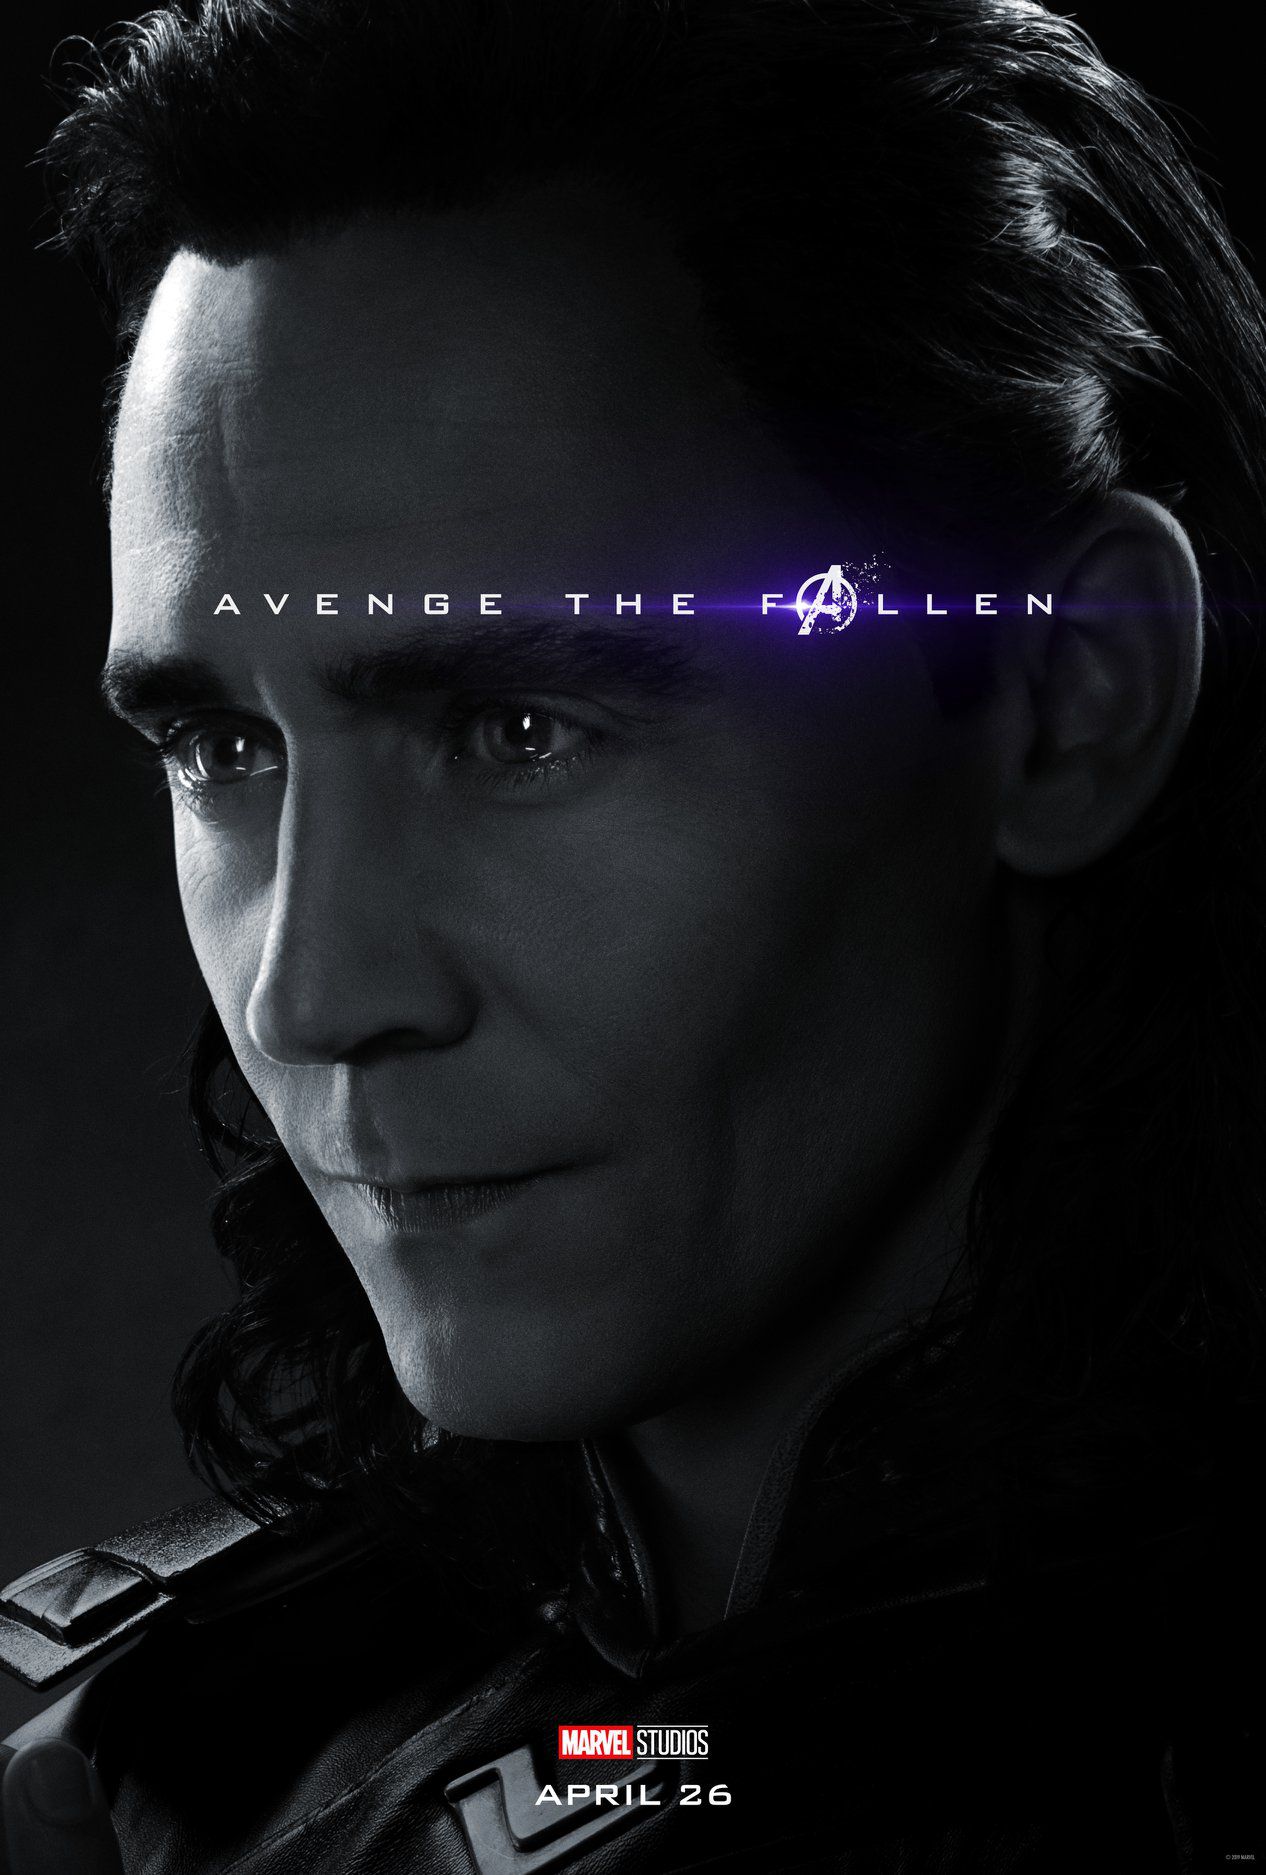 Avengers Endgame Official Poster Wallpapers